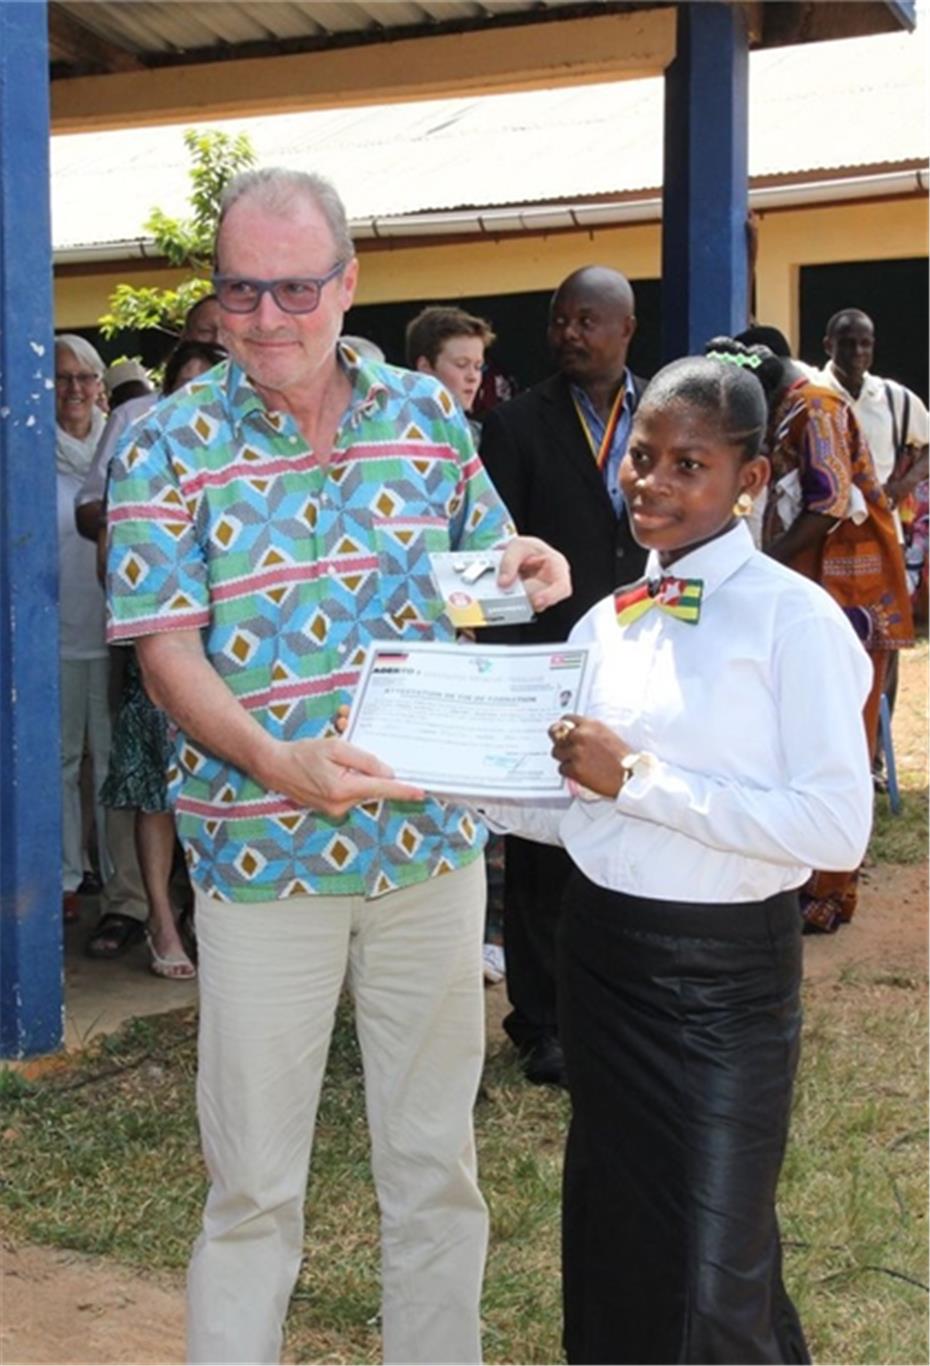 Engagement der Togo-Hilfe e.V.
Rheinbach zahlt sich aus